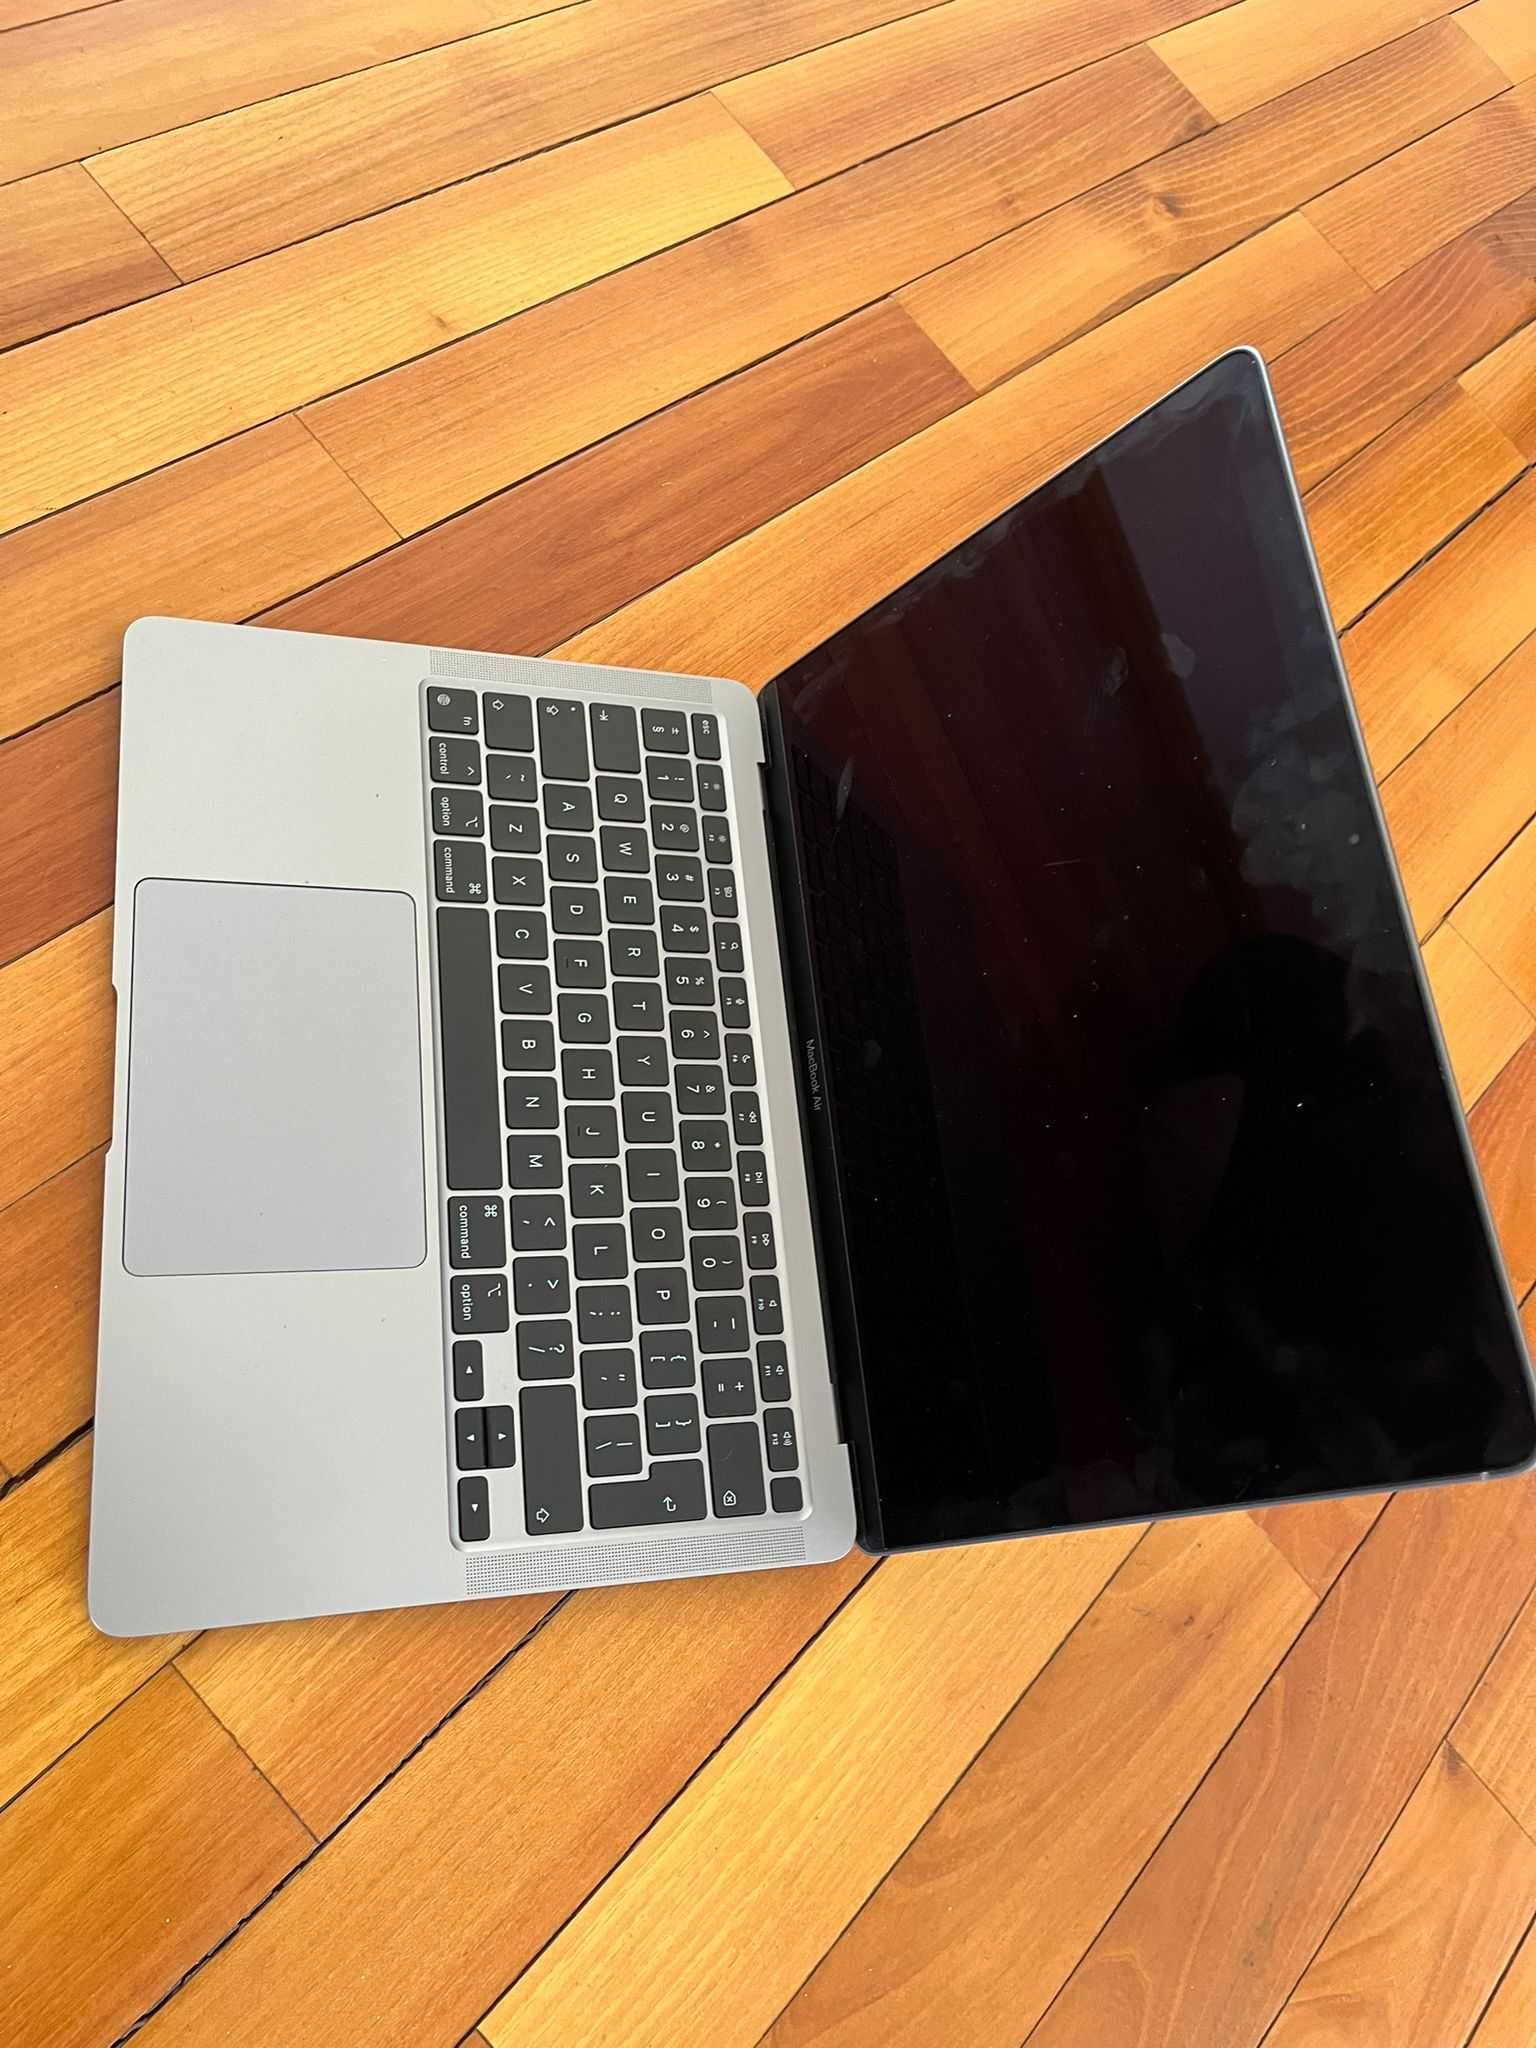 MacBook Air, Apple M1 Chip, 13 inch, 256 GB SSD